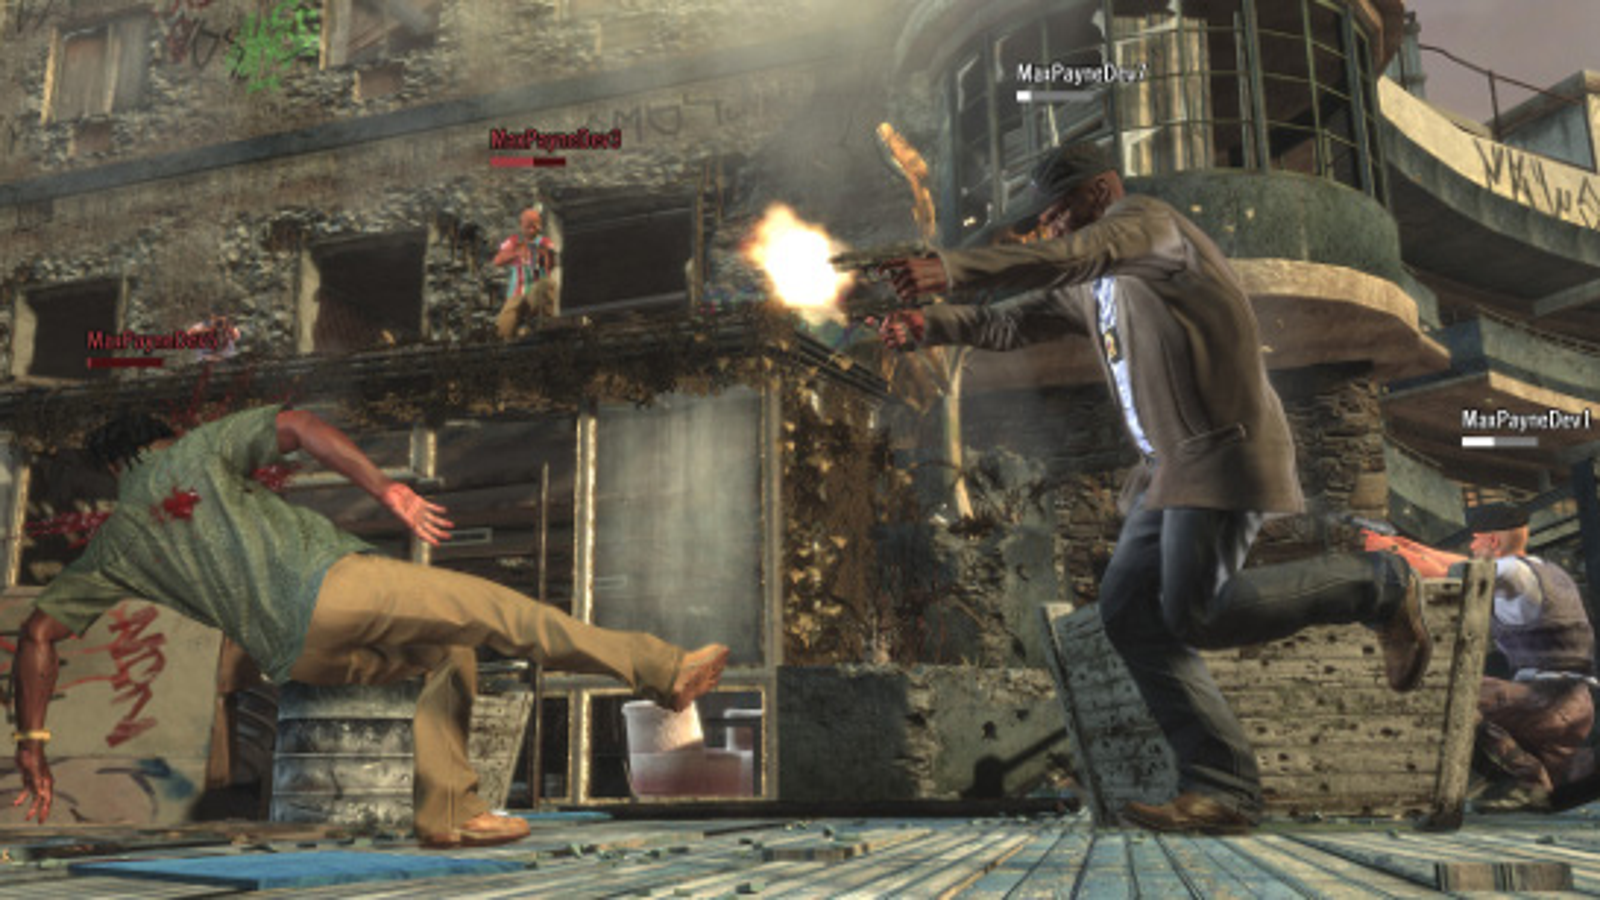 Buy Max Payne 3 - Rockstar Pass PC Steam key! Cheap price